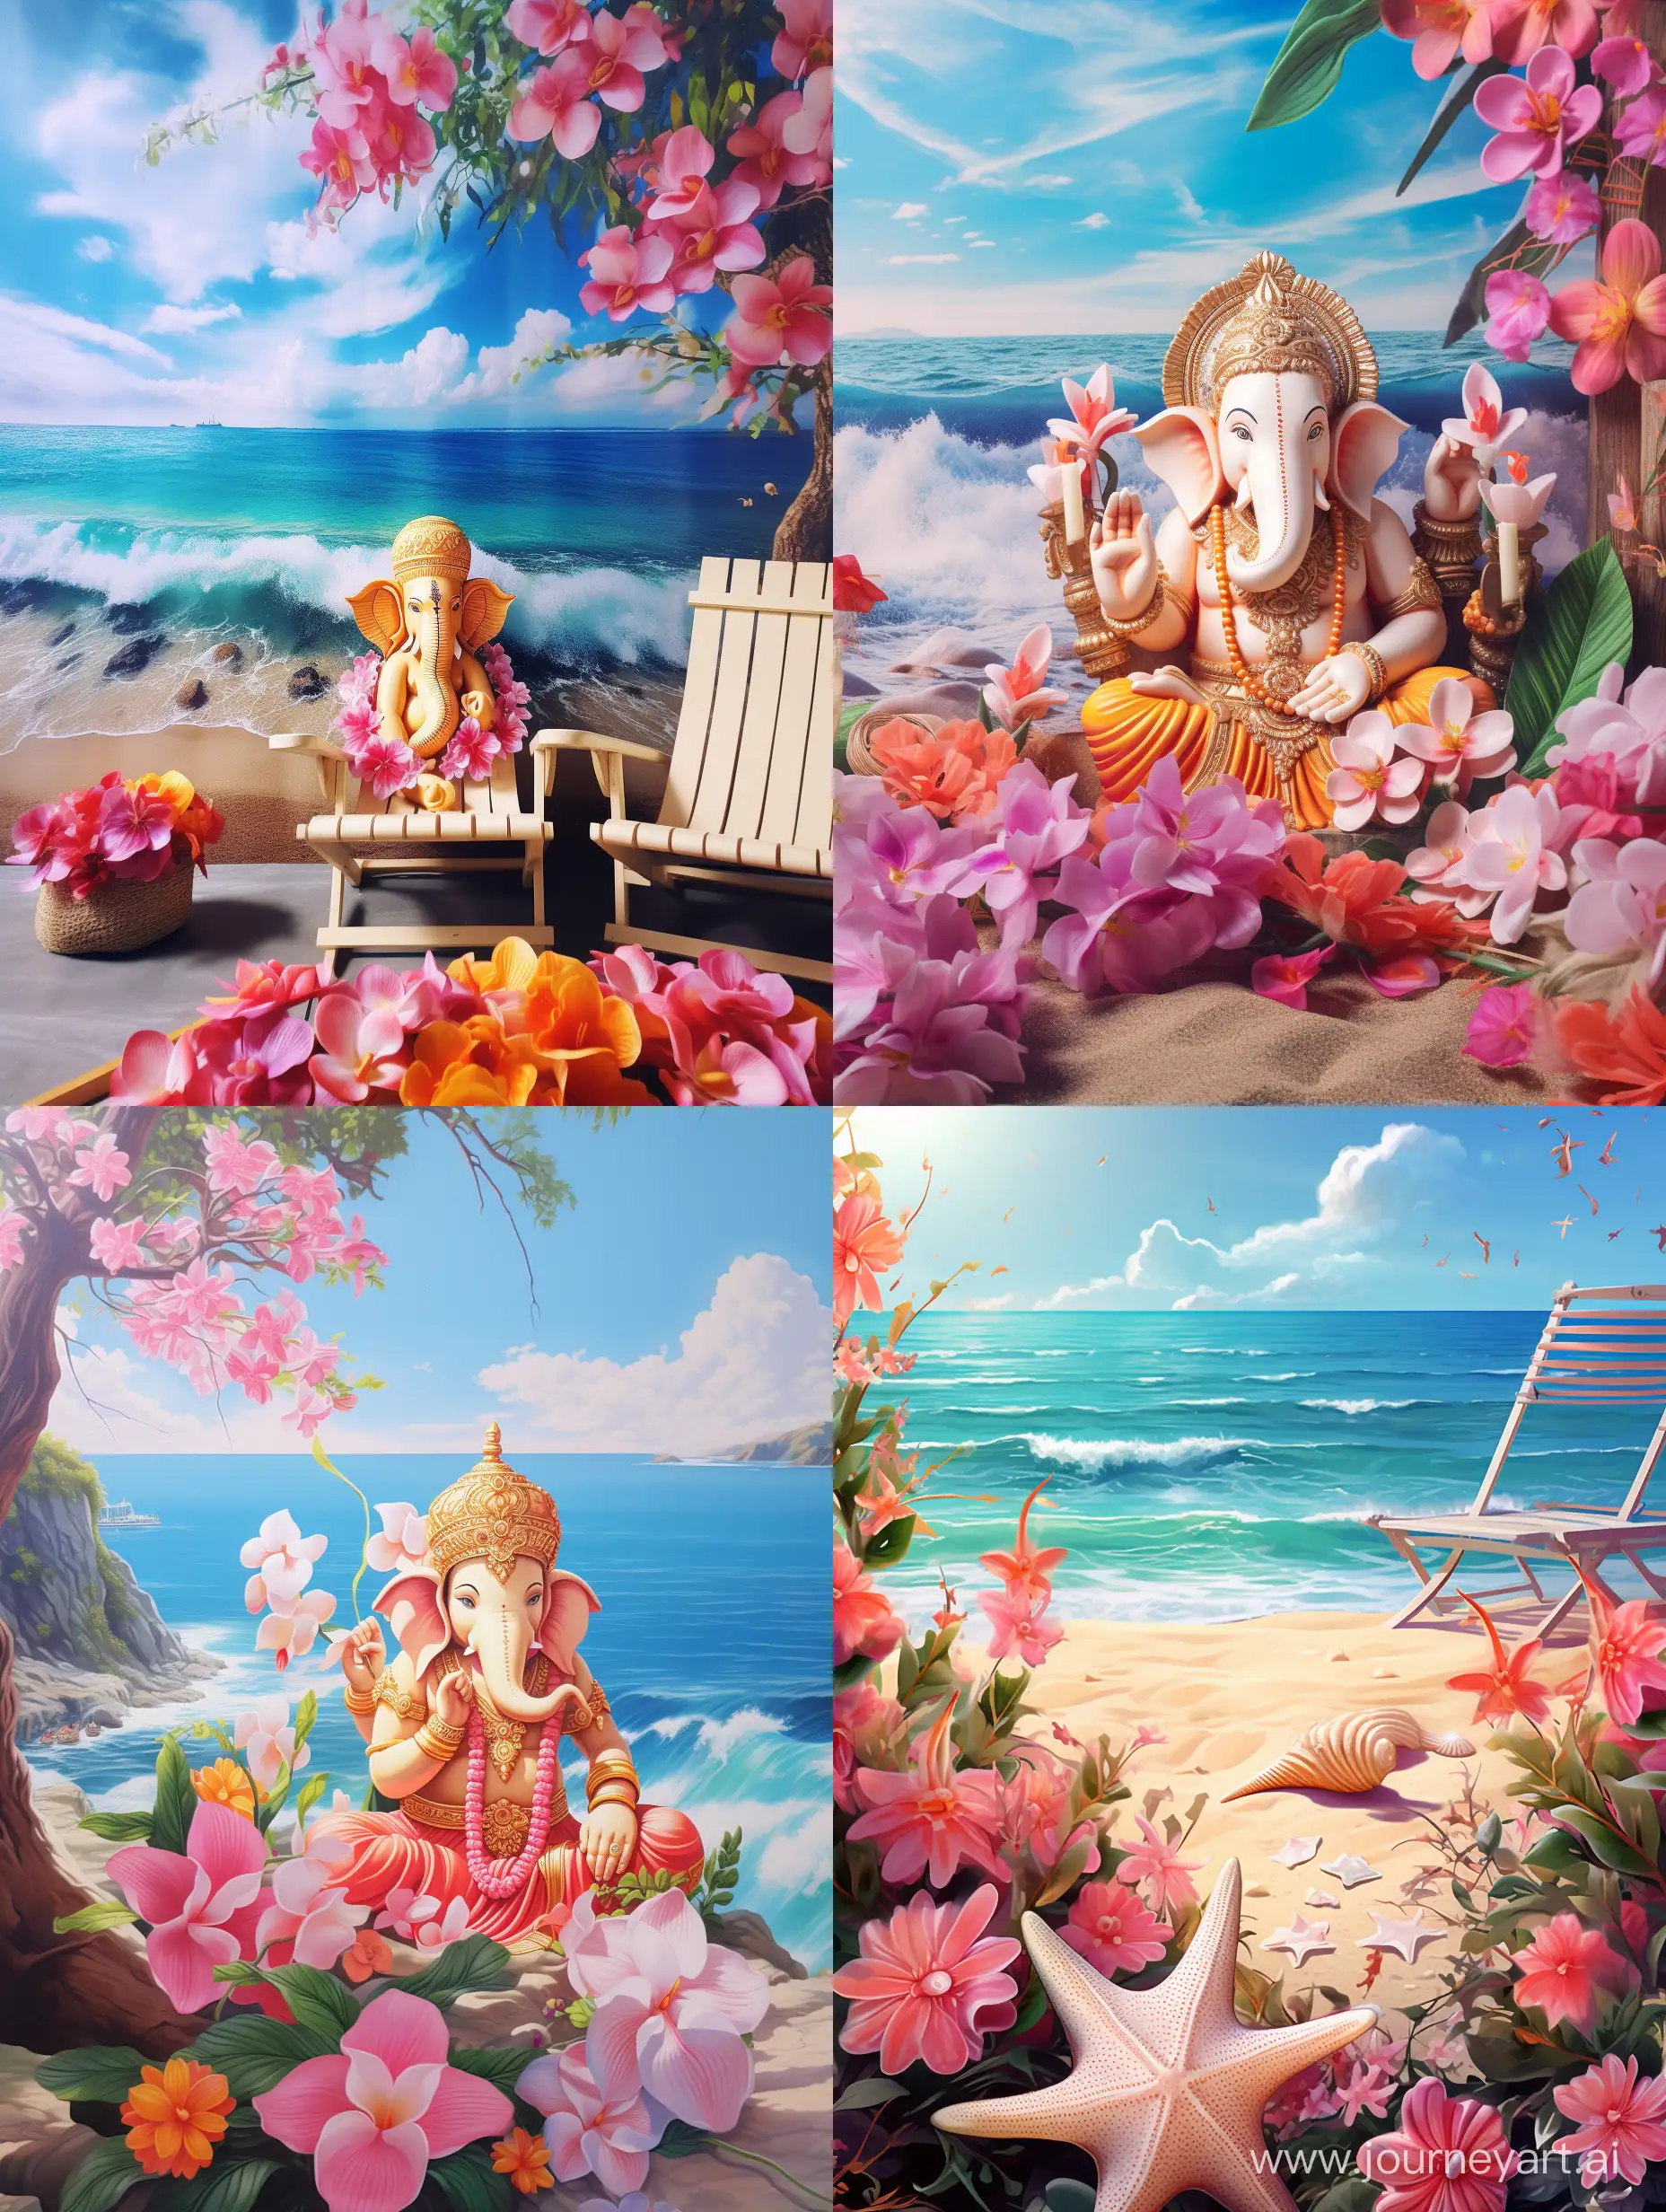 vibrant wallpaper with sakura and Ganesha God on a beach on a sunny day